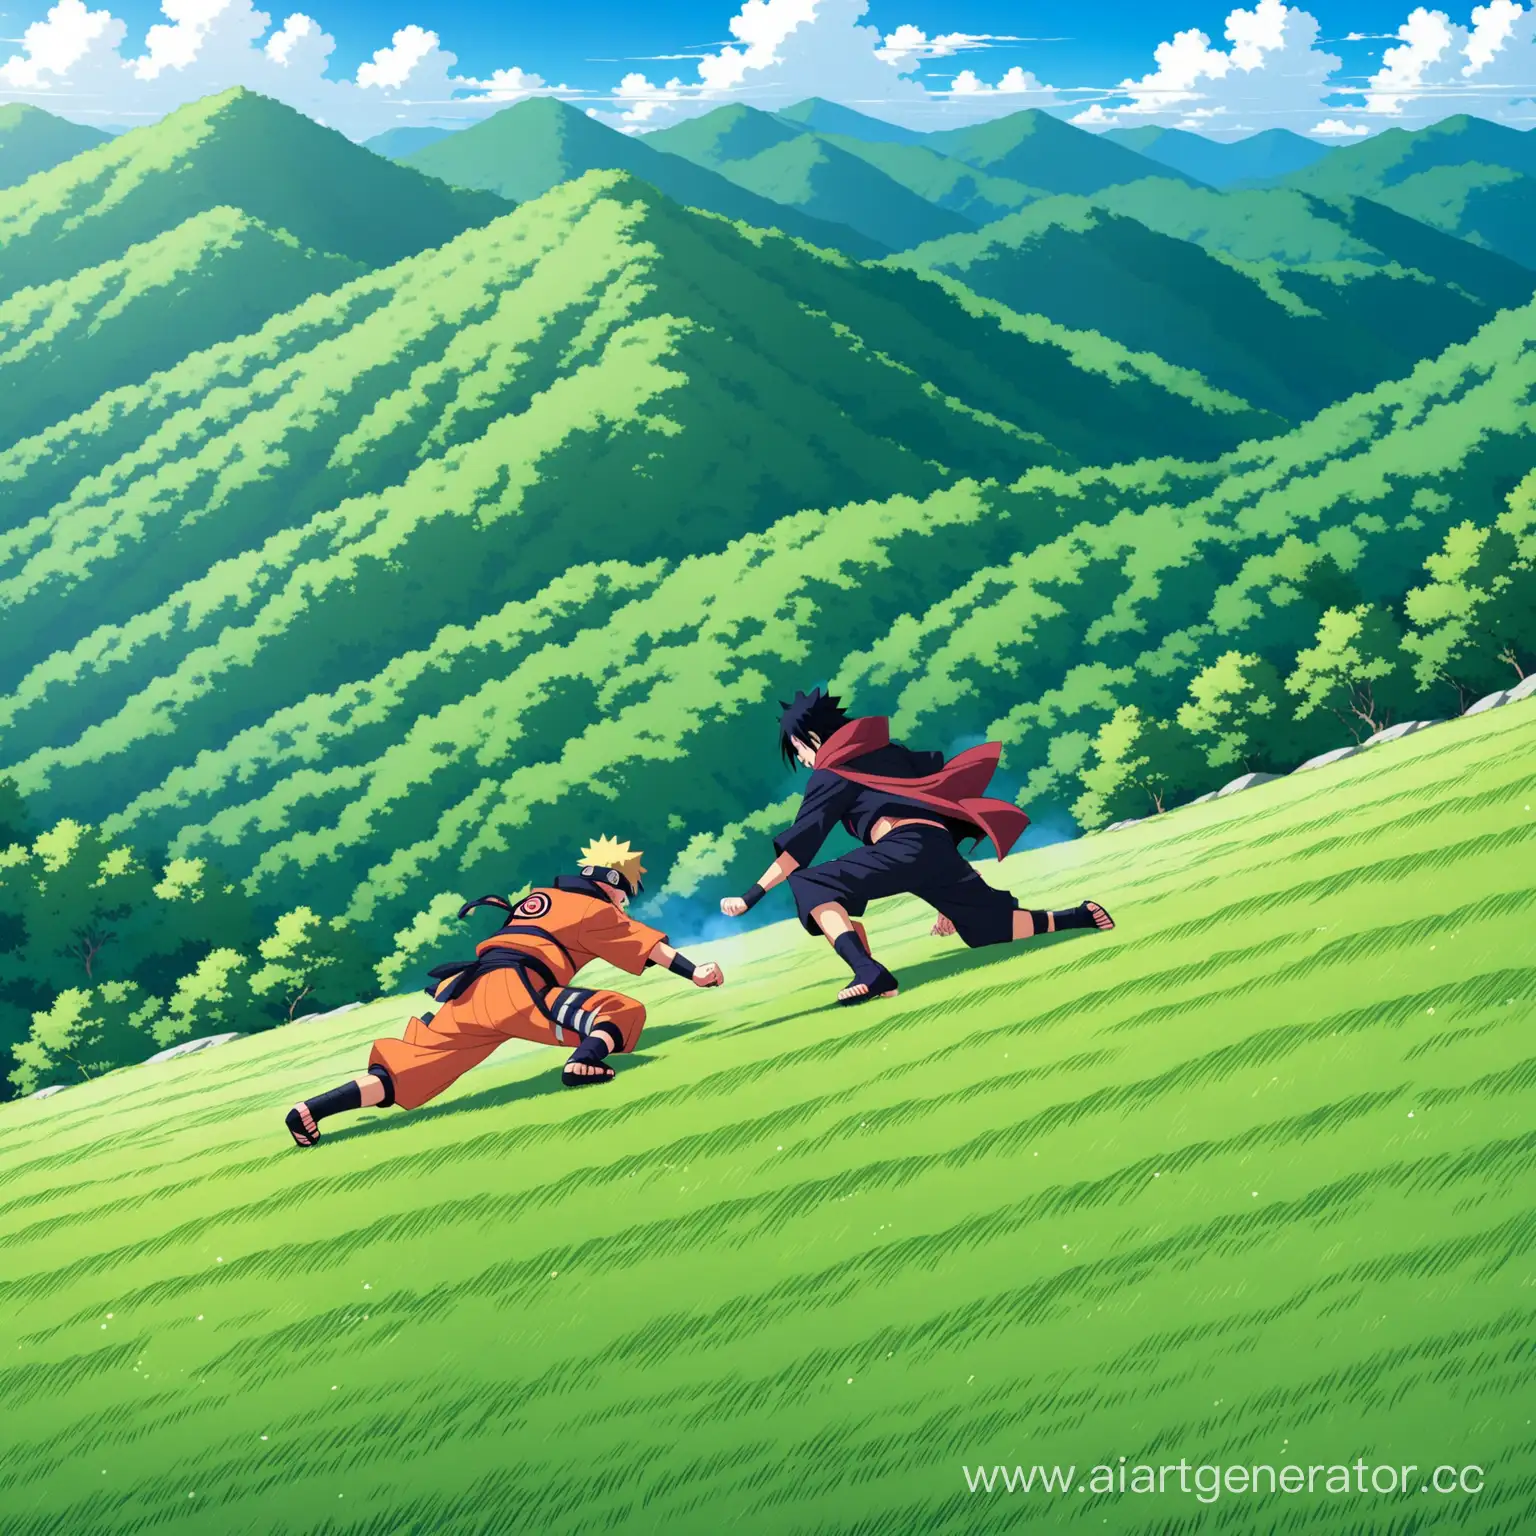 Epic-Naruto-vs-Sasuke-Battle-Amidst-Mountain-Terrain